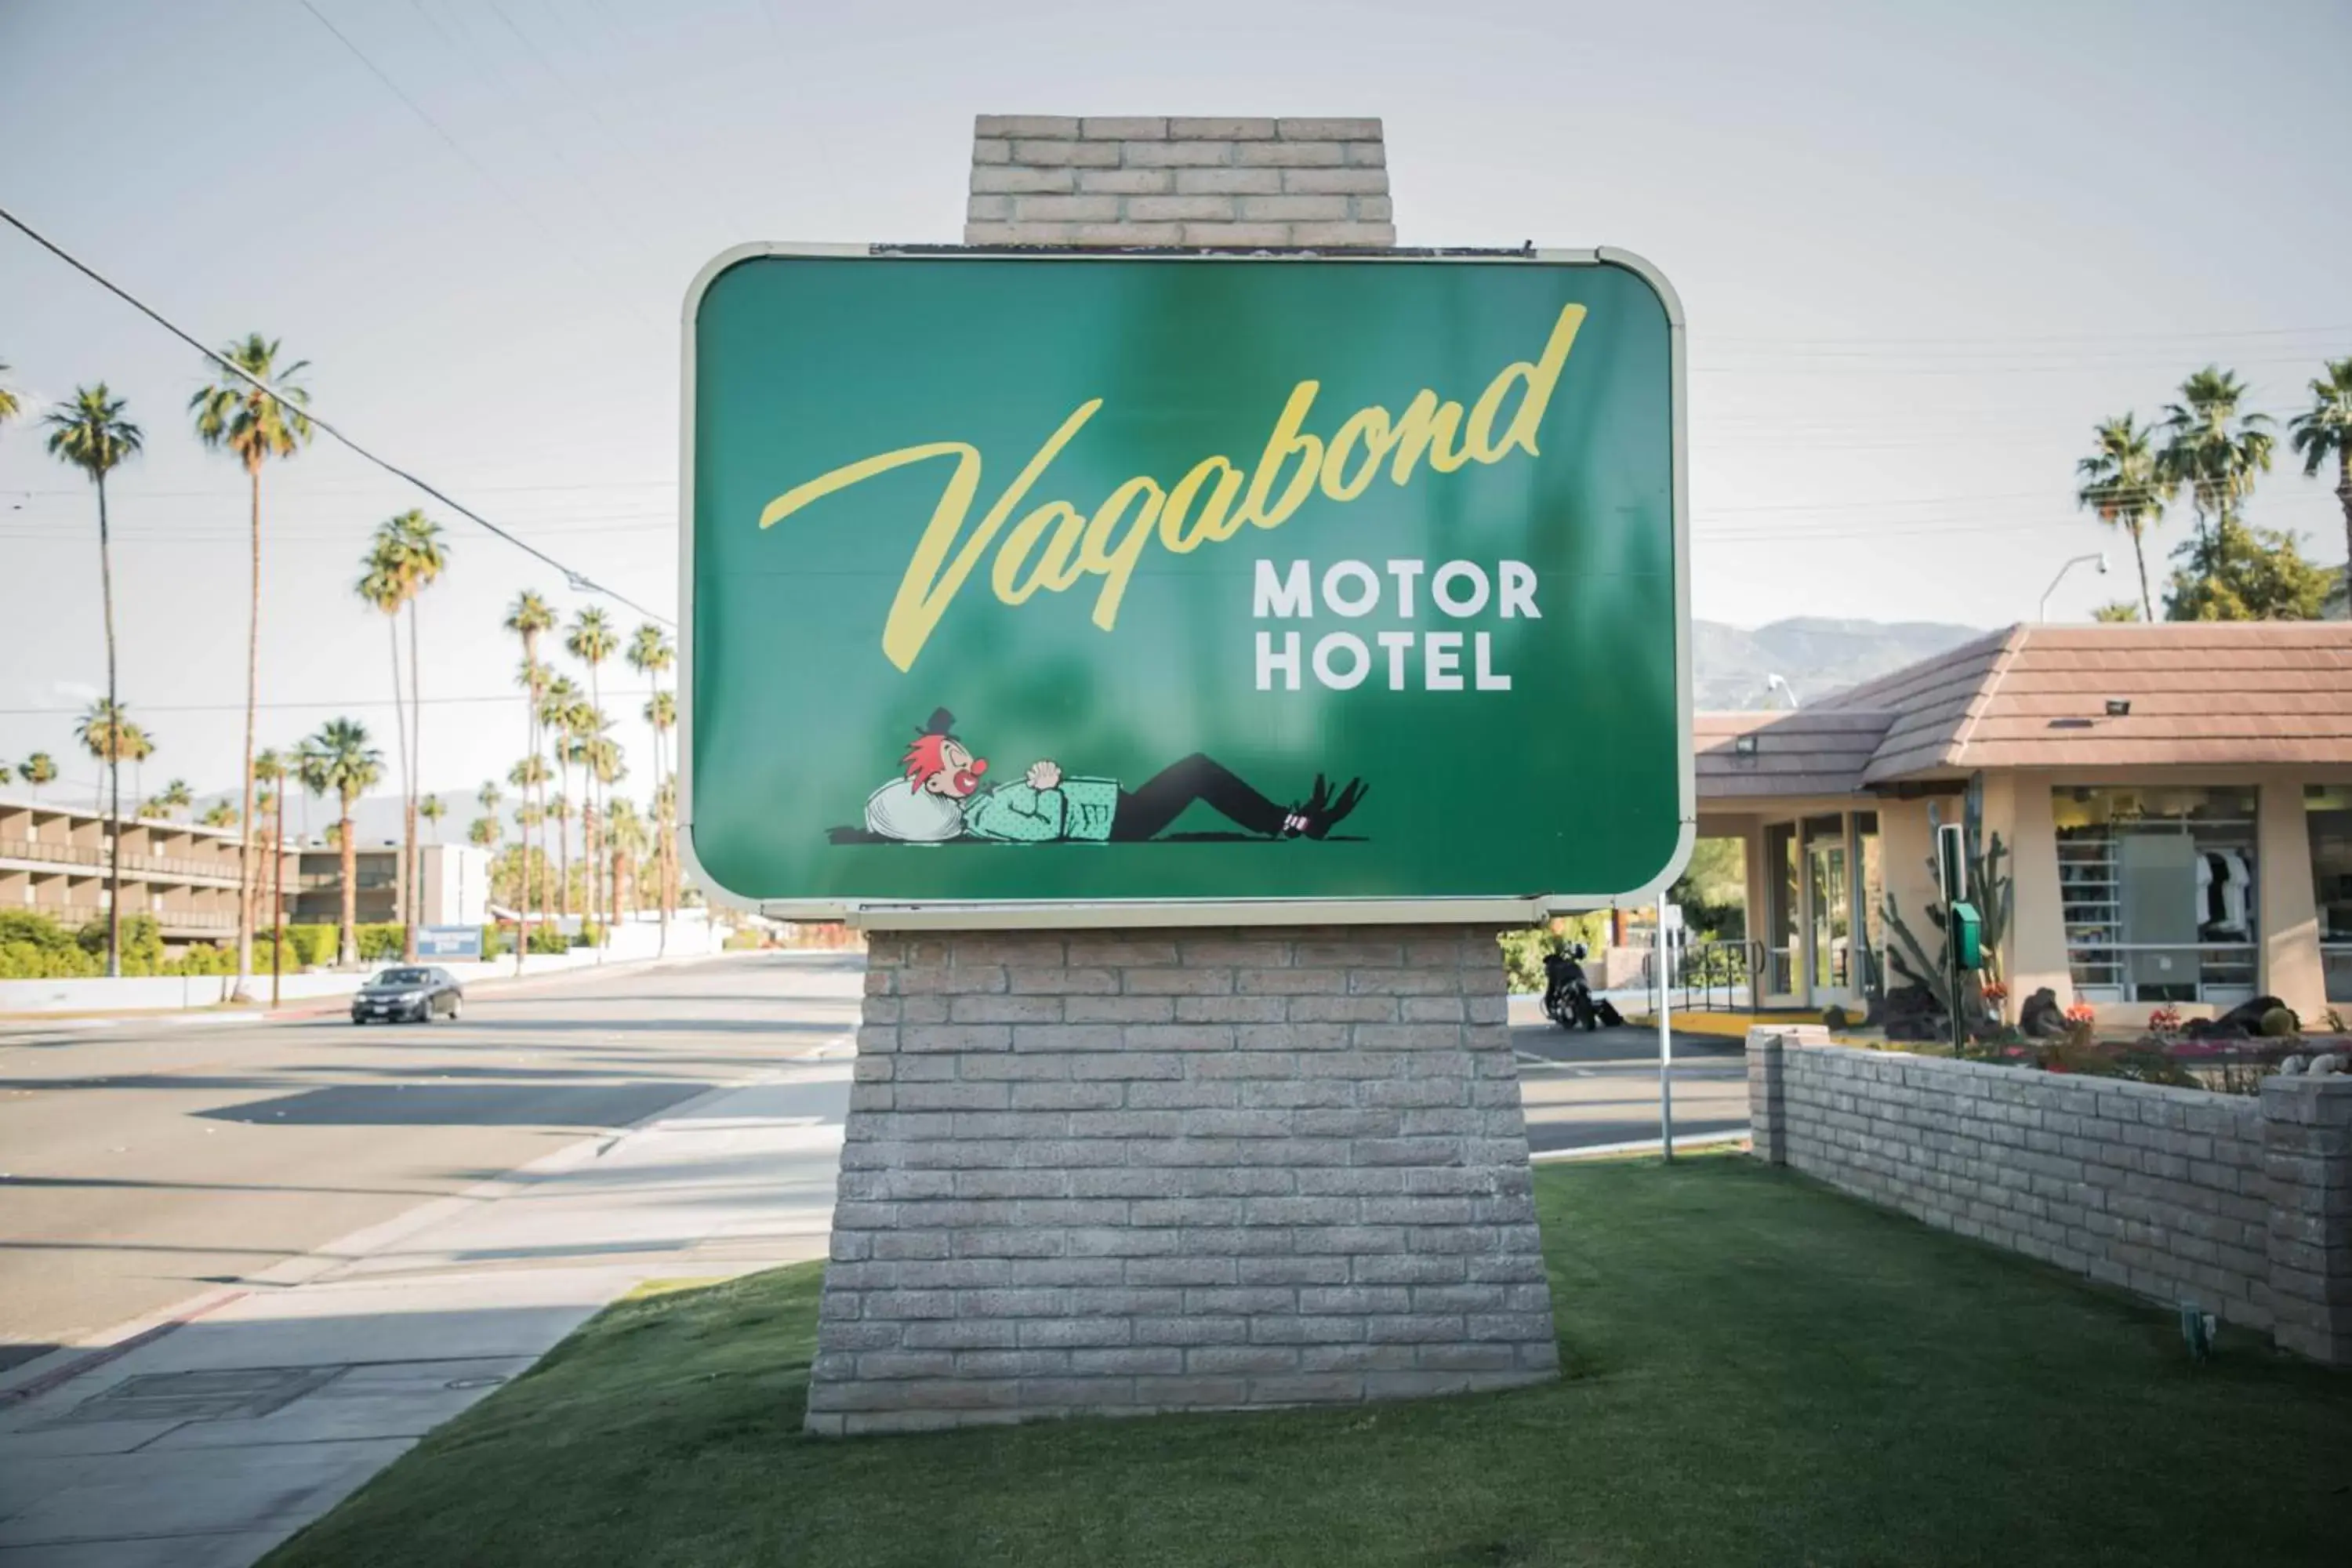 Property logo or sign in Vagabond Motor Hotel - Palm Springs